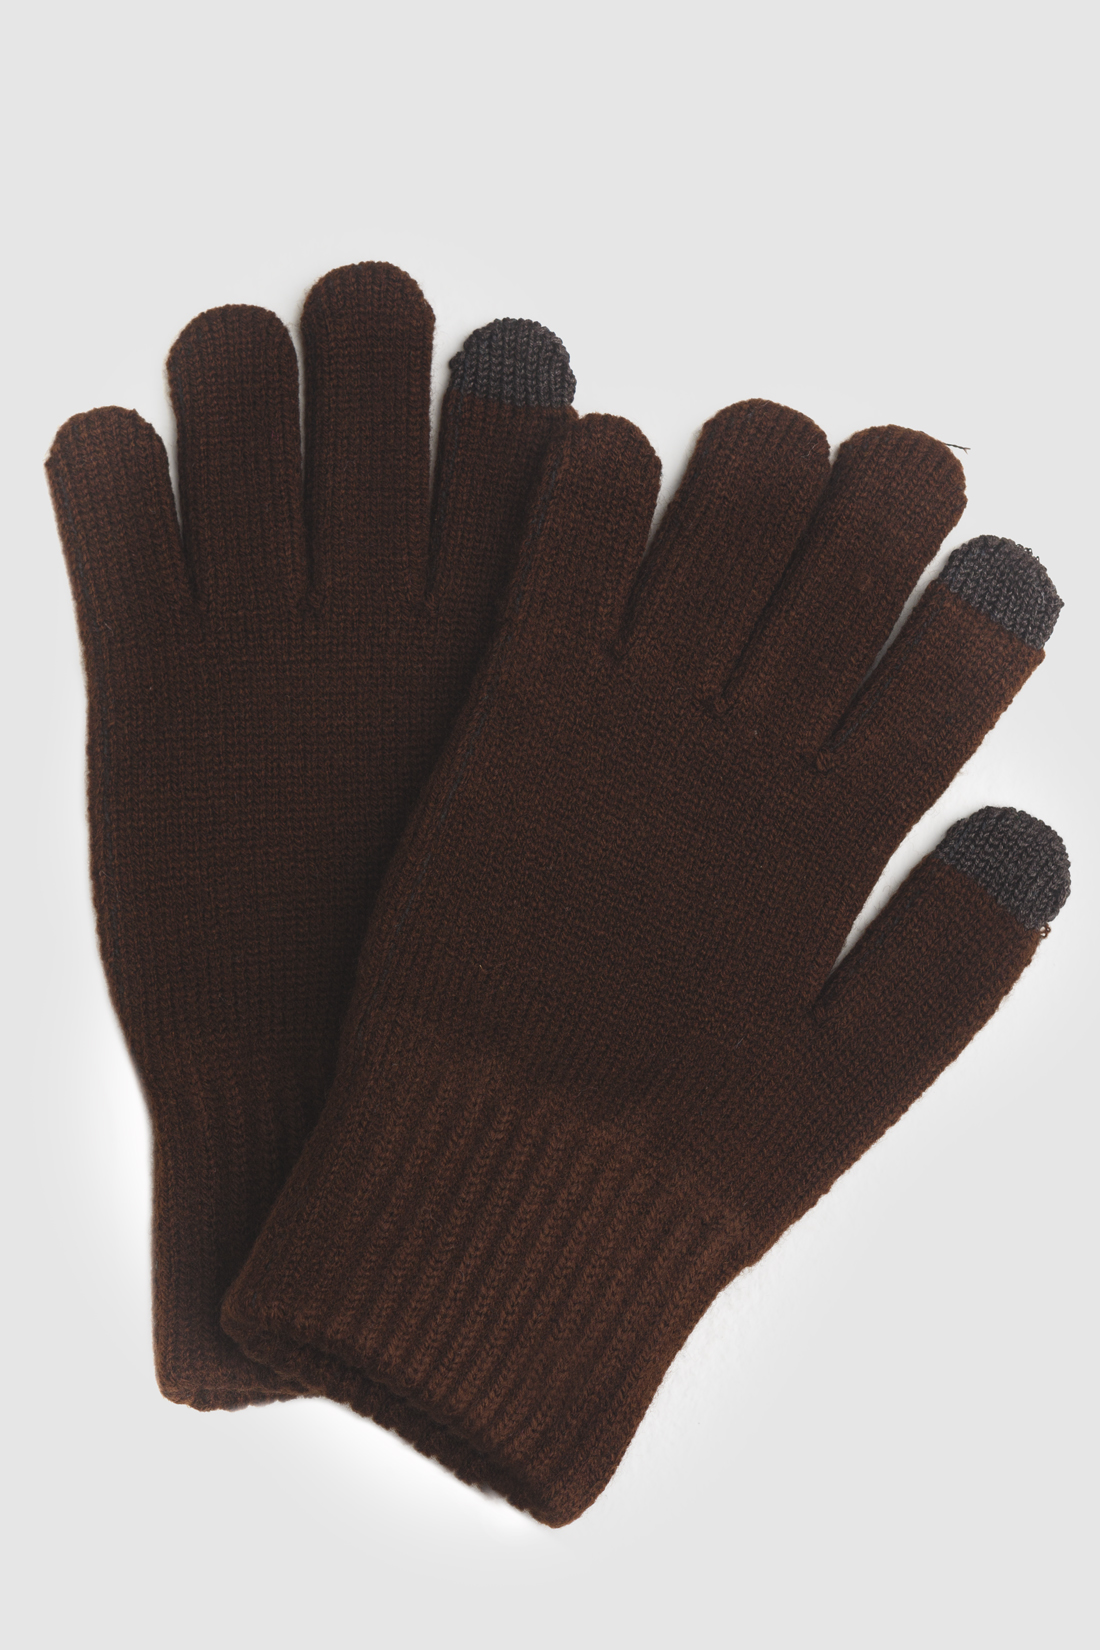 Перчатки (арт. baon B360526), размер Без/раз, цвет коричневый